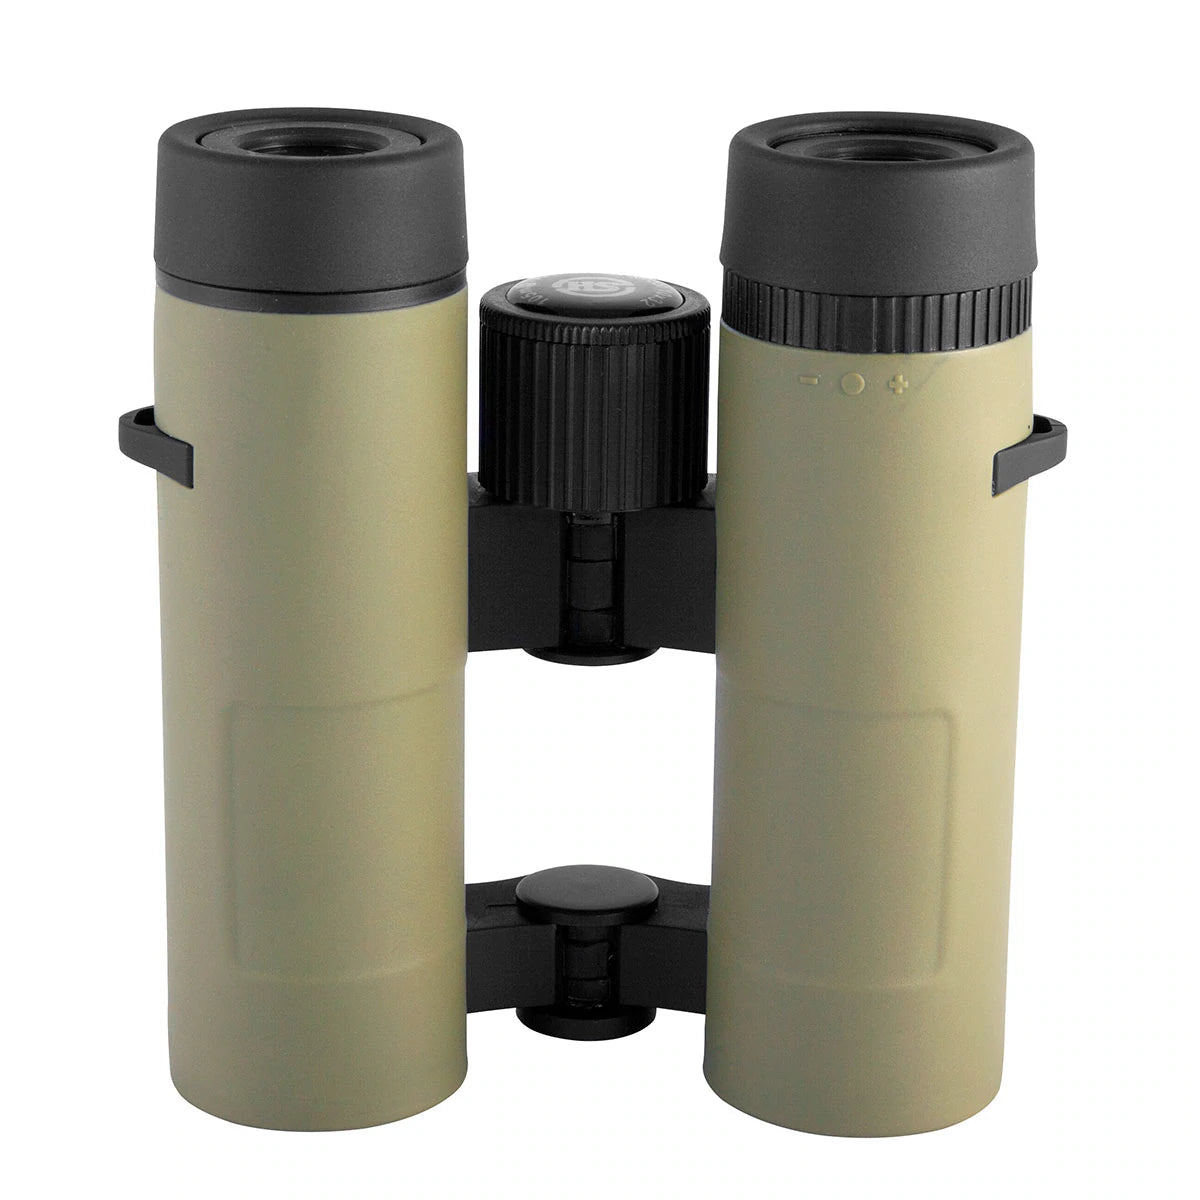 Bresser HS 10X32mm Primal Series Birding Binoculars-HS-01032 - CoreScientifics-Telescopes, Sport Optics & More